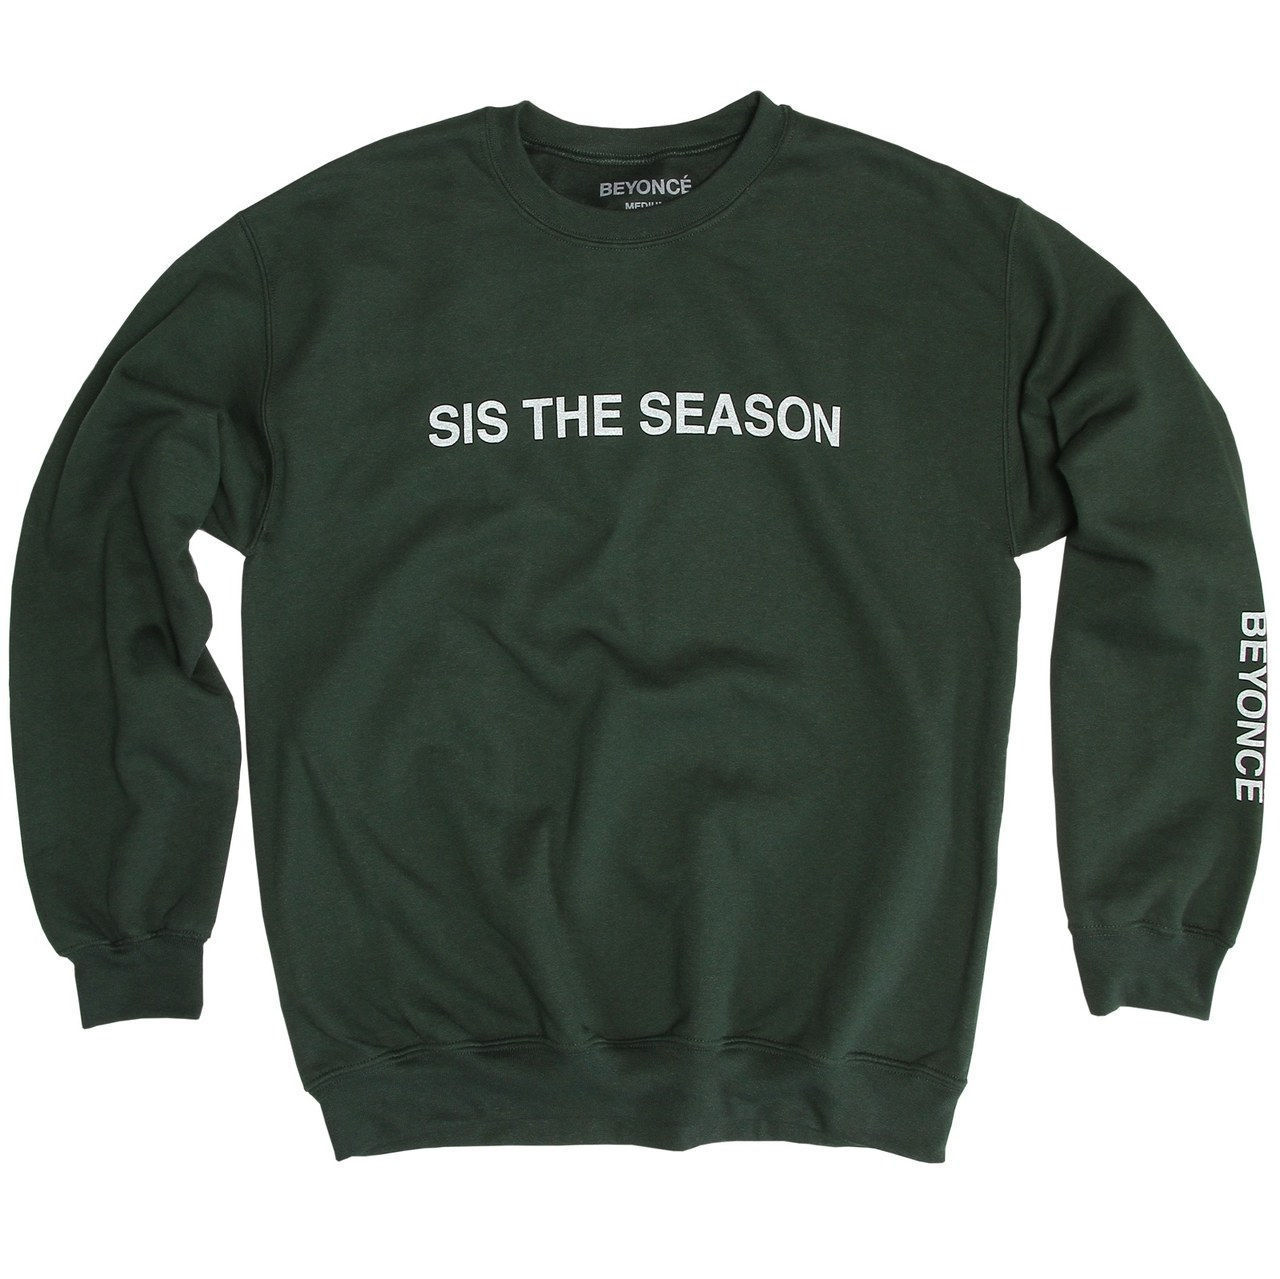 Schwester the Season Crew Neck, $55, [Beyonce.com](https://shop.beyonce.com/products/62199-sis-the-season-crewneck)